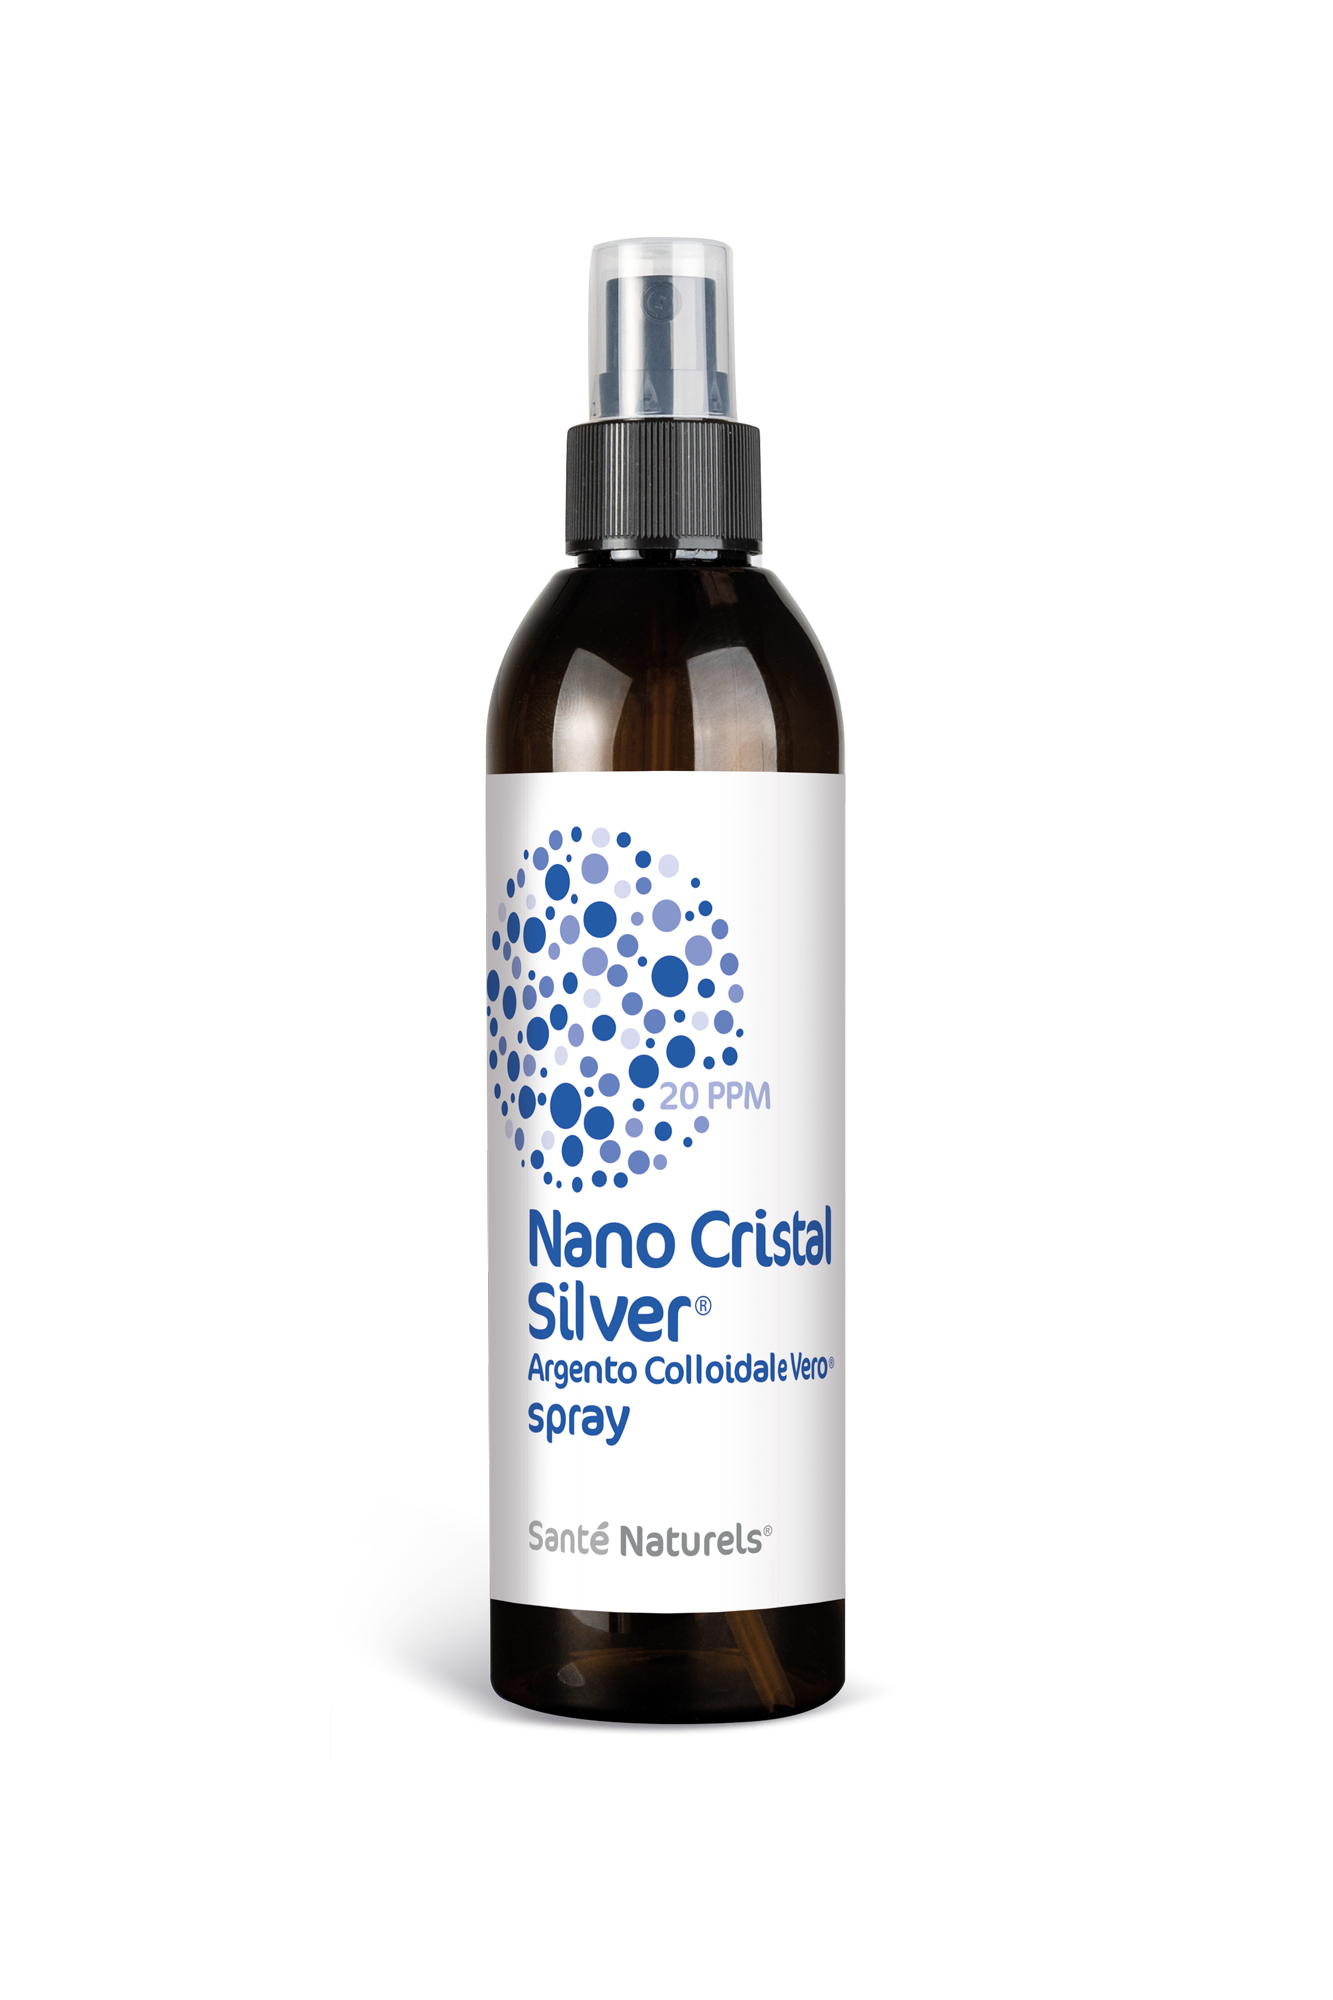 Plata Coloidal Vero® Nano Cristal Silver® 20 ppm 500 ml LA ELECCIÓN MÁS ECONÓMICA 